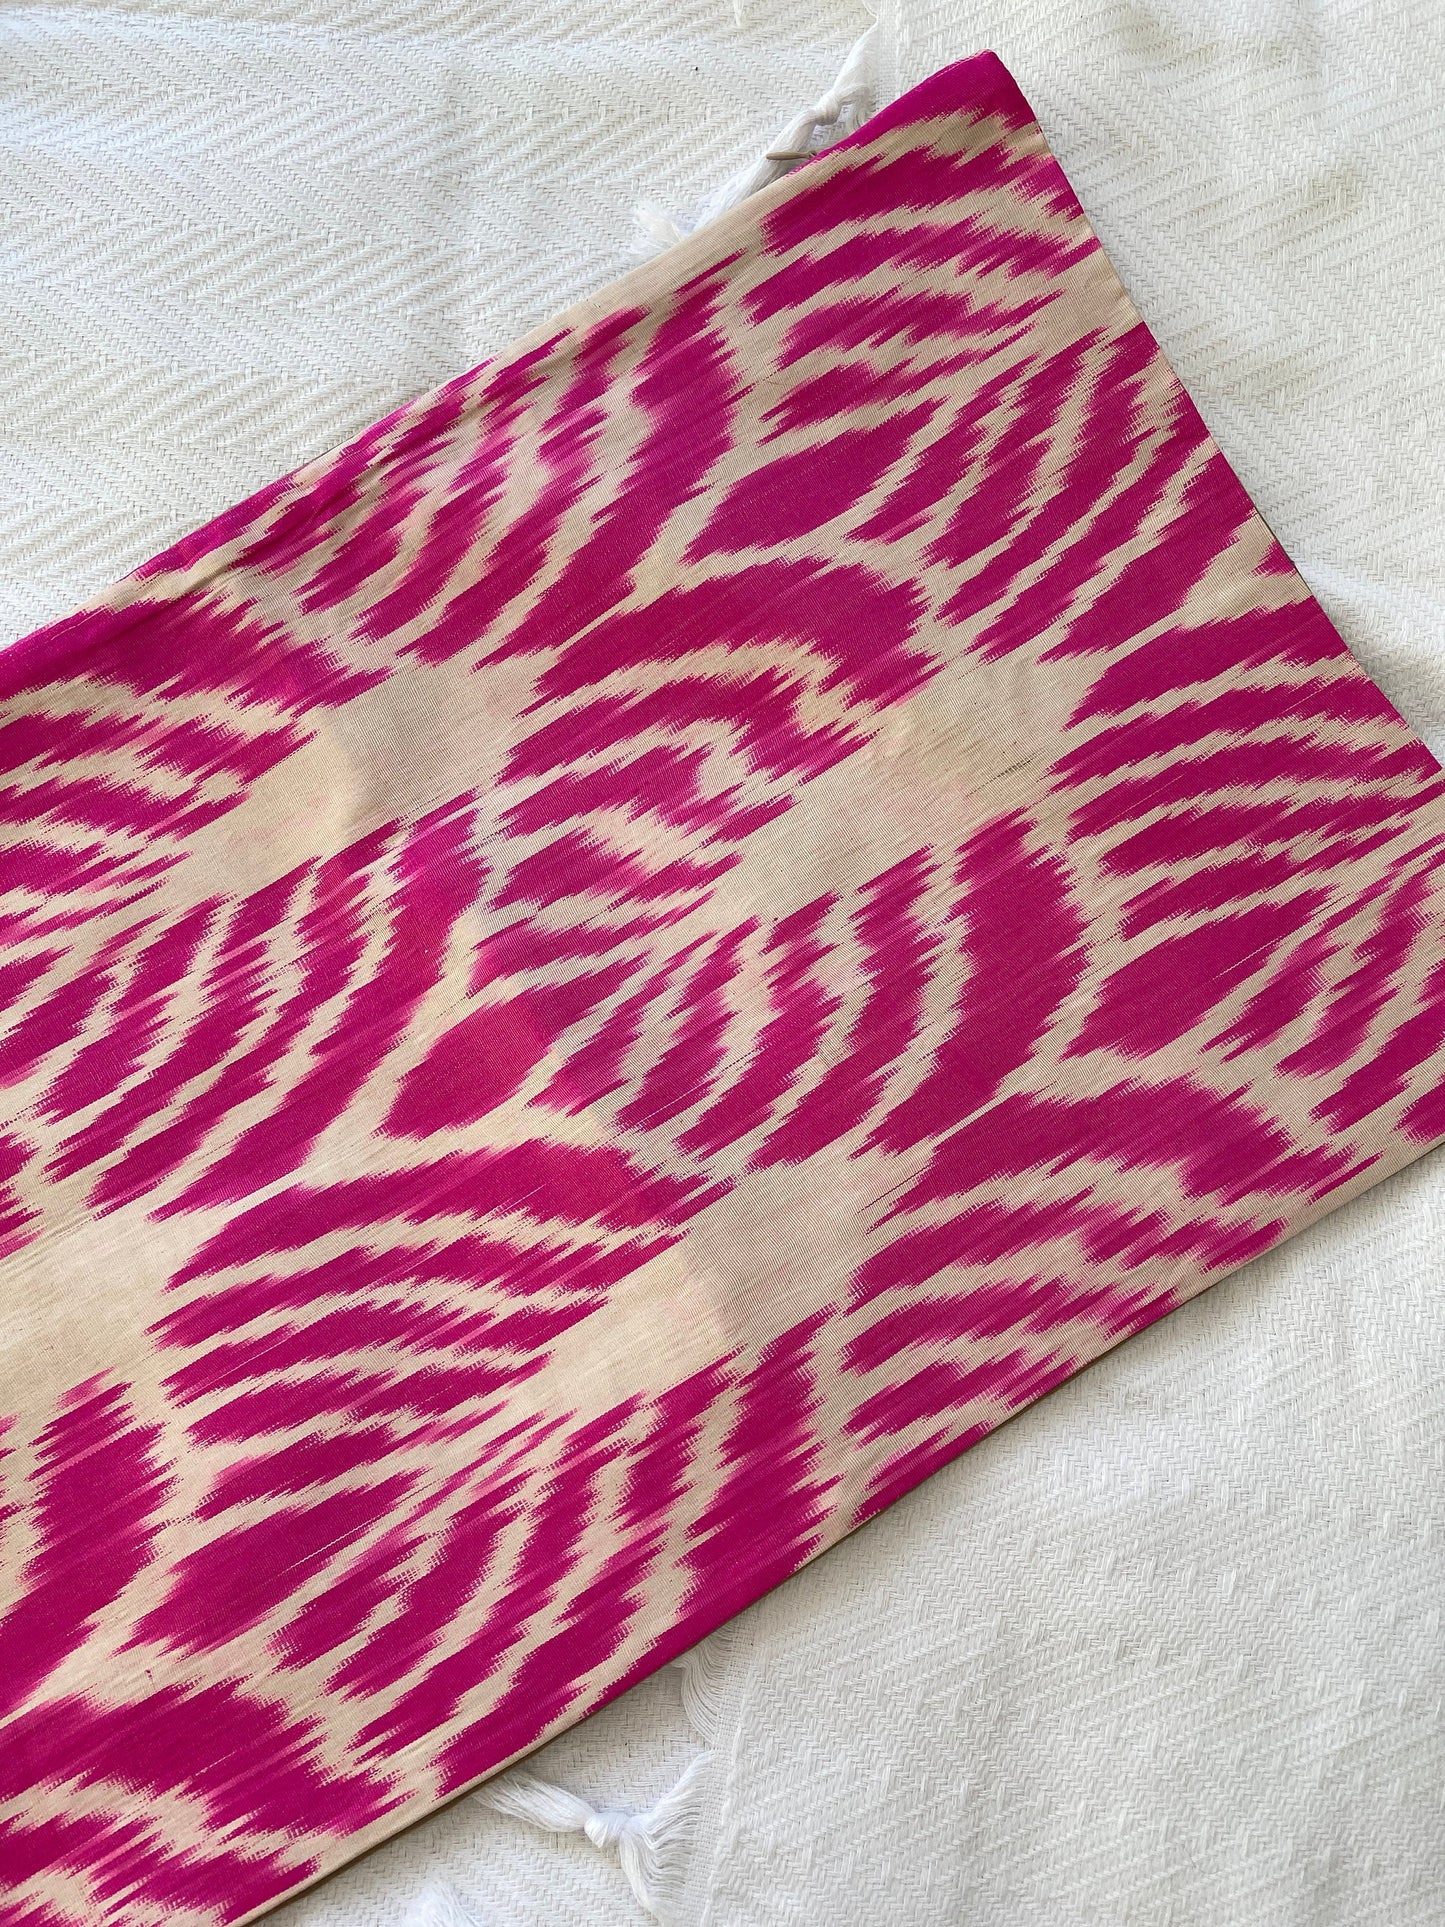 Silk Ikat Pink Cushion Cover, Decorative Cushions 40x60